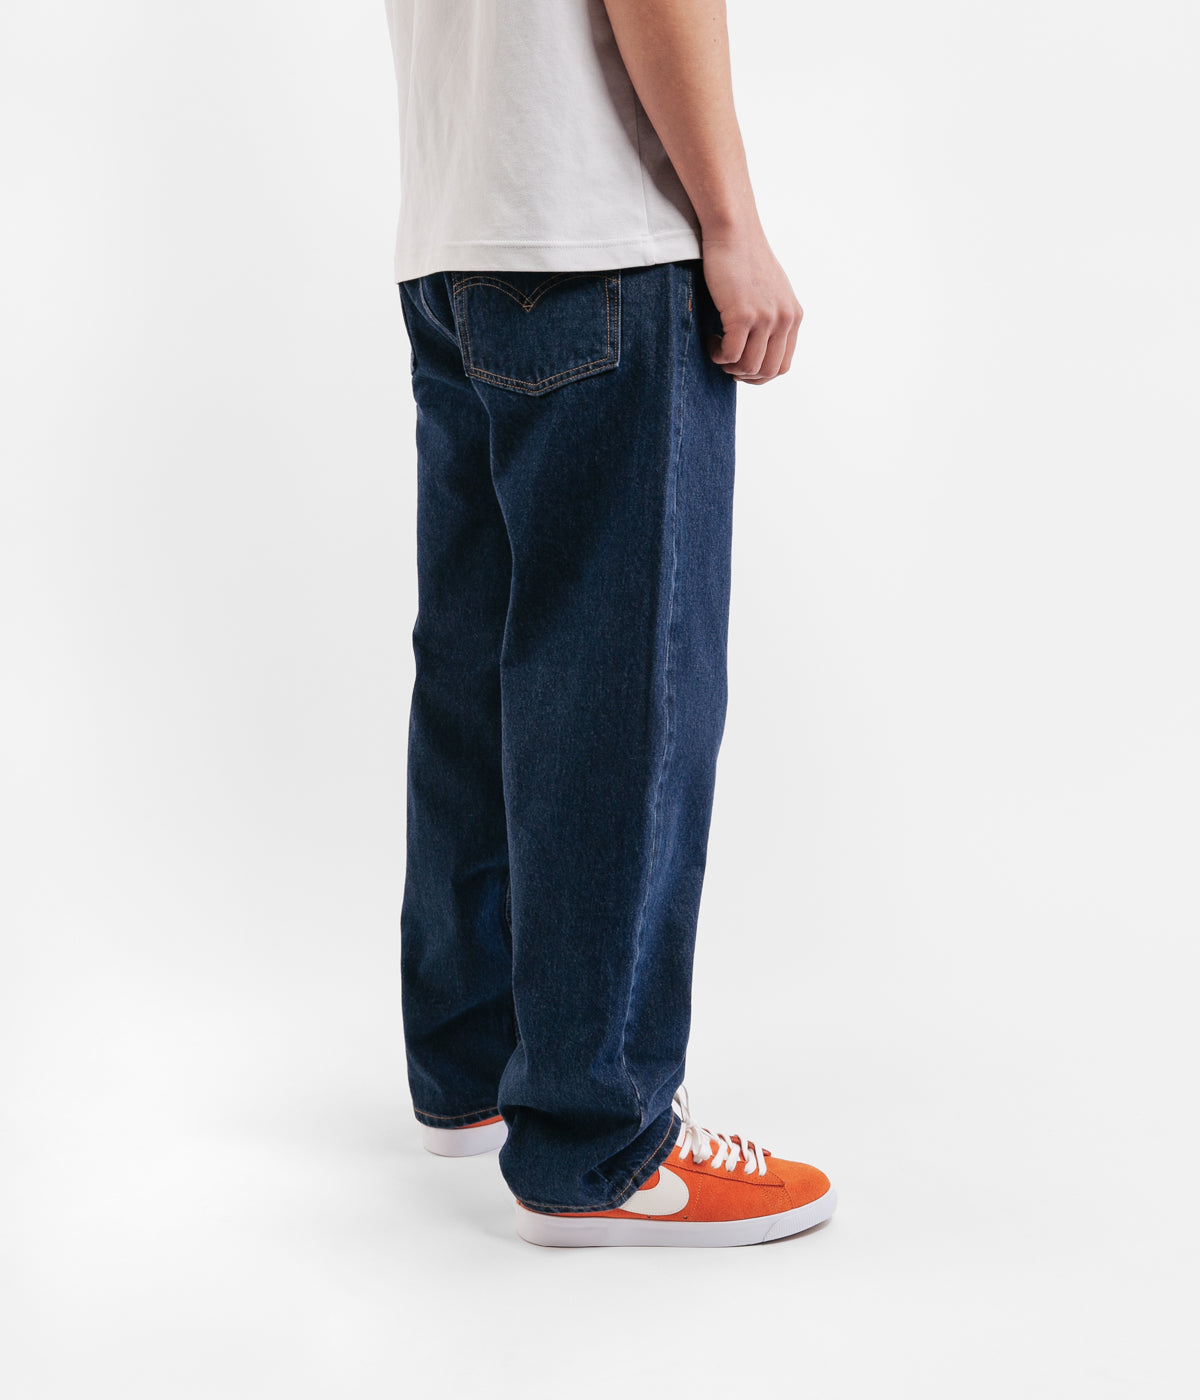 Levi's® Skate Baggy 5 Pocket Jeans - Big Bear | Flatspot